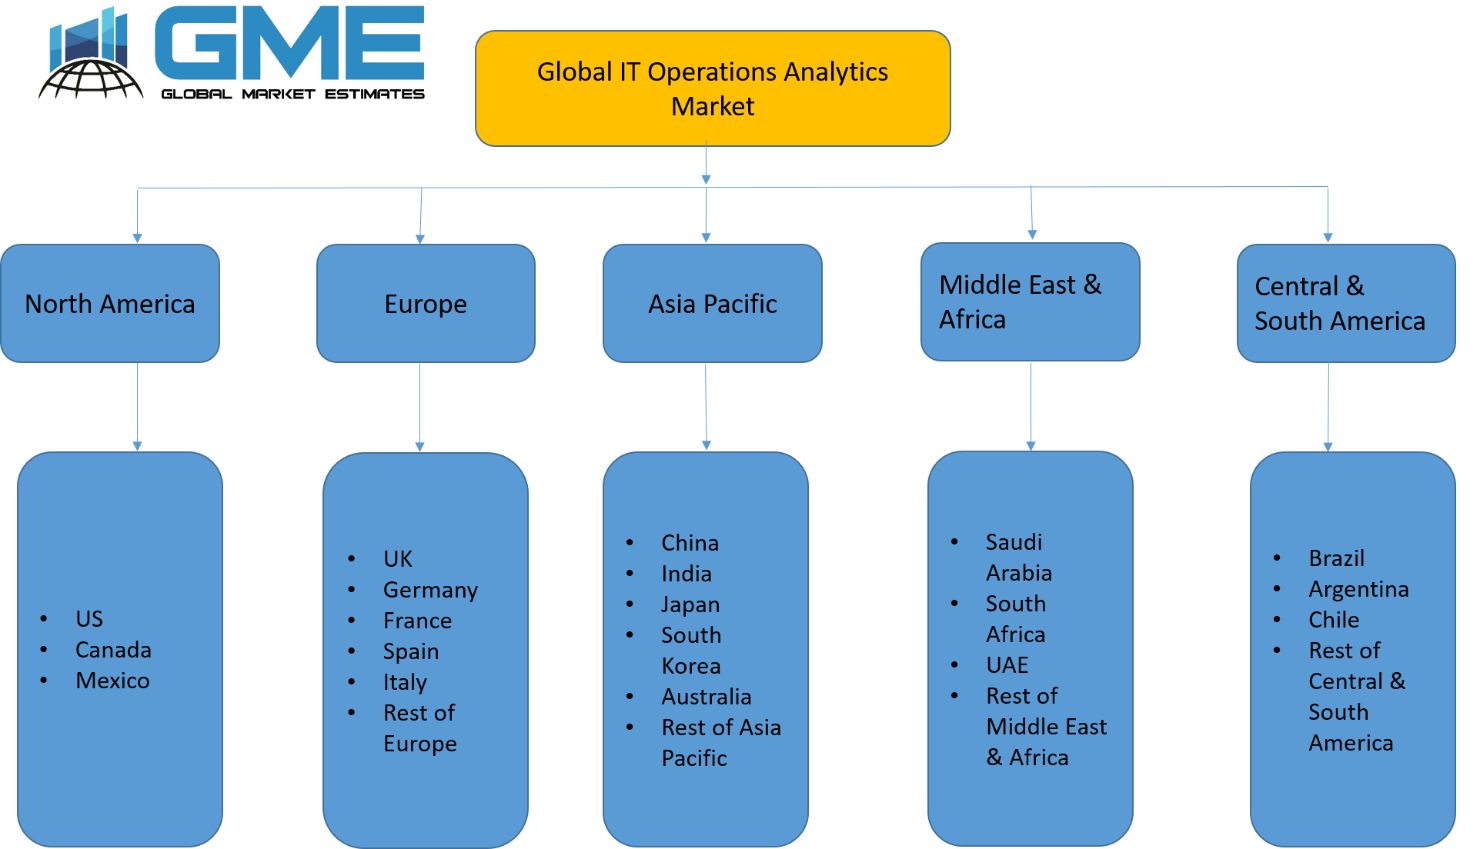 Global IT Operations Analytics Market - Regional Analysis